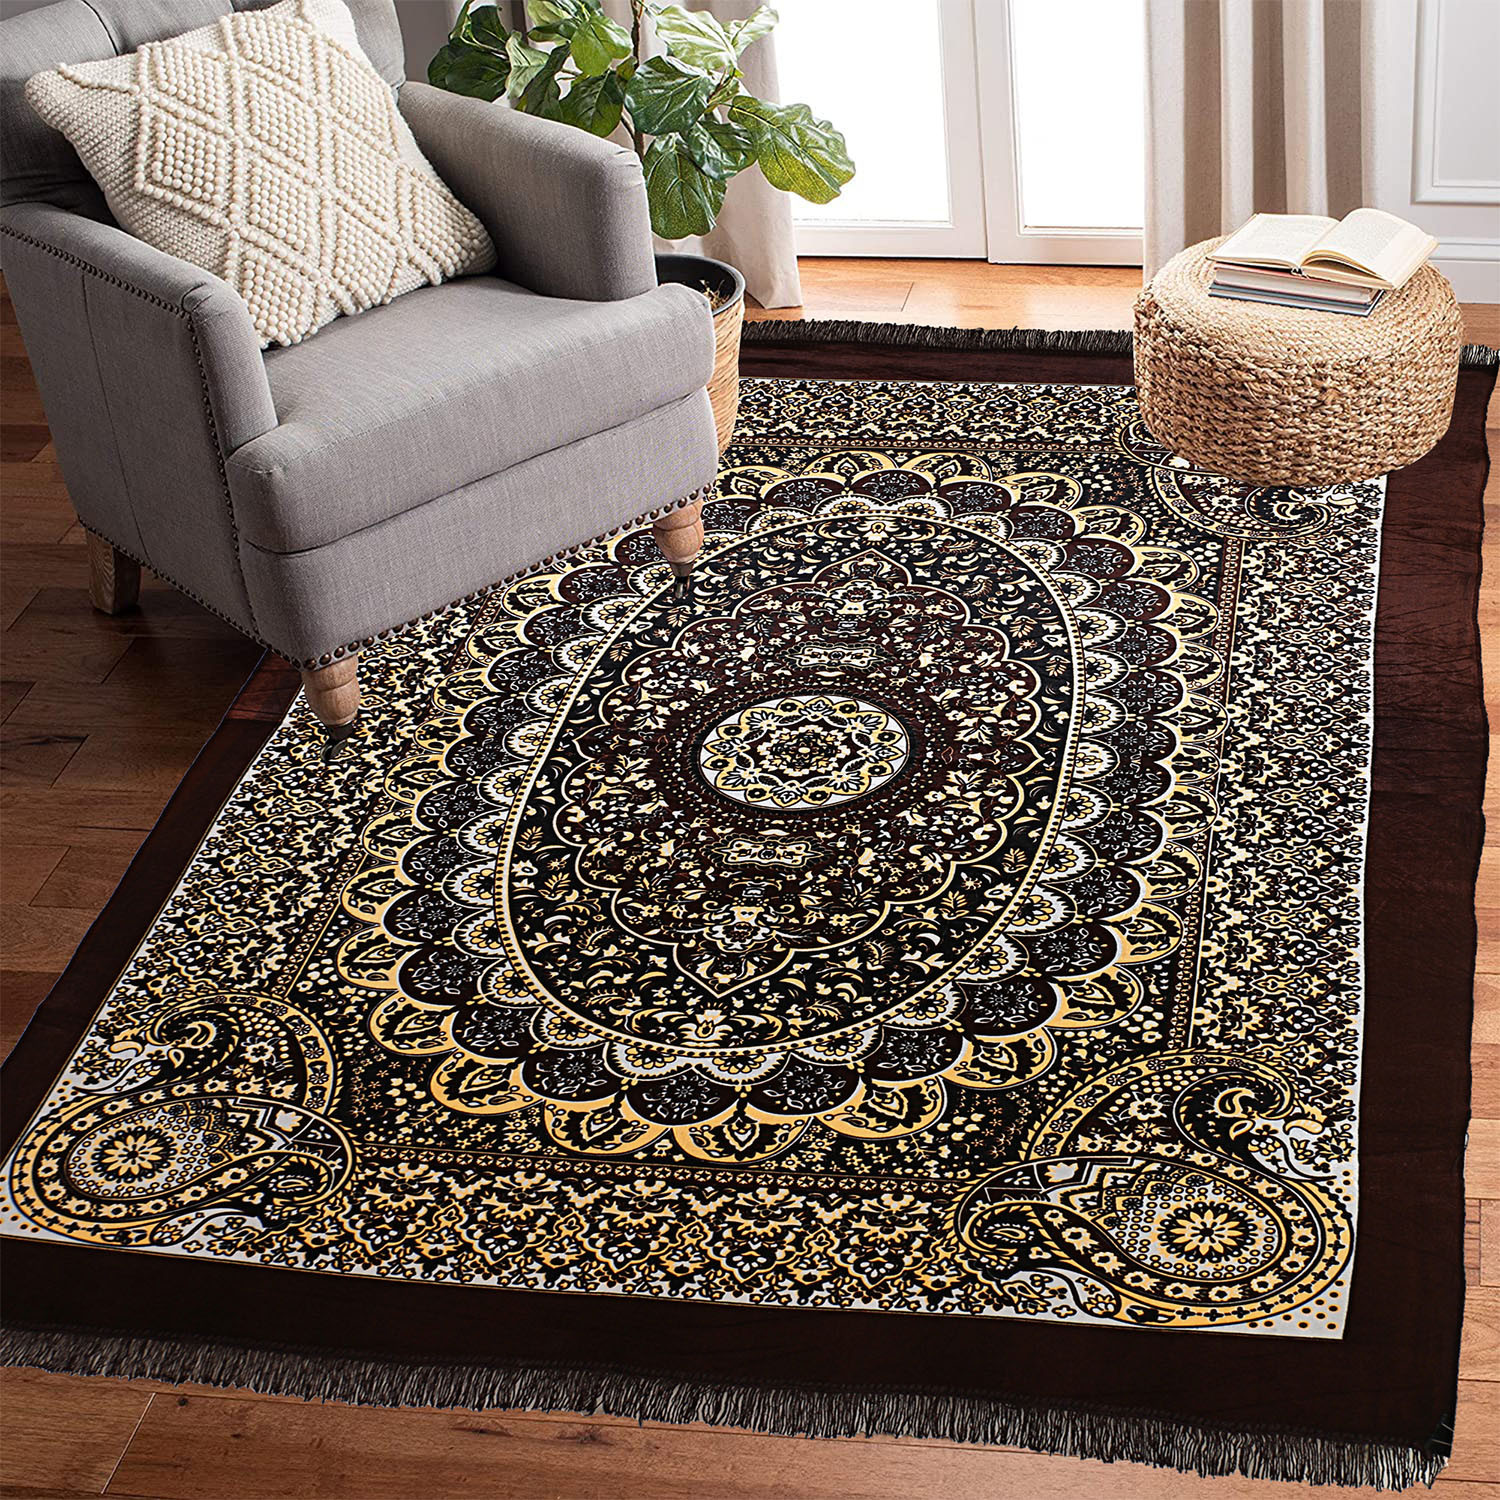 Kuber Industries Carpet|Water Absorption Kalamkari Paisley Pattern Floor Mat|Velvet Sitting Carpet for Hall, Living Room, 5x7 Feet (Brown)